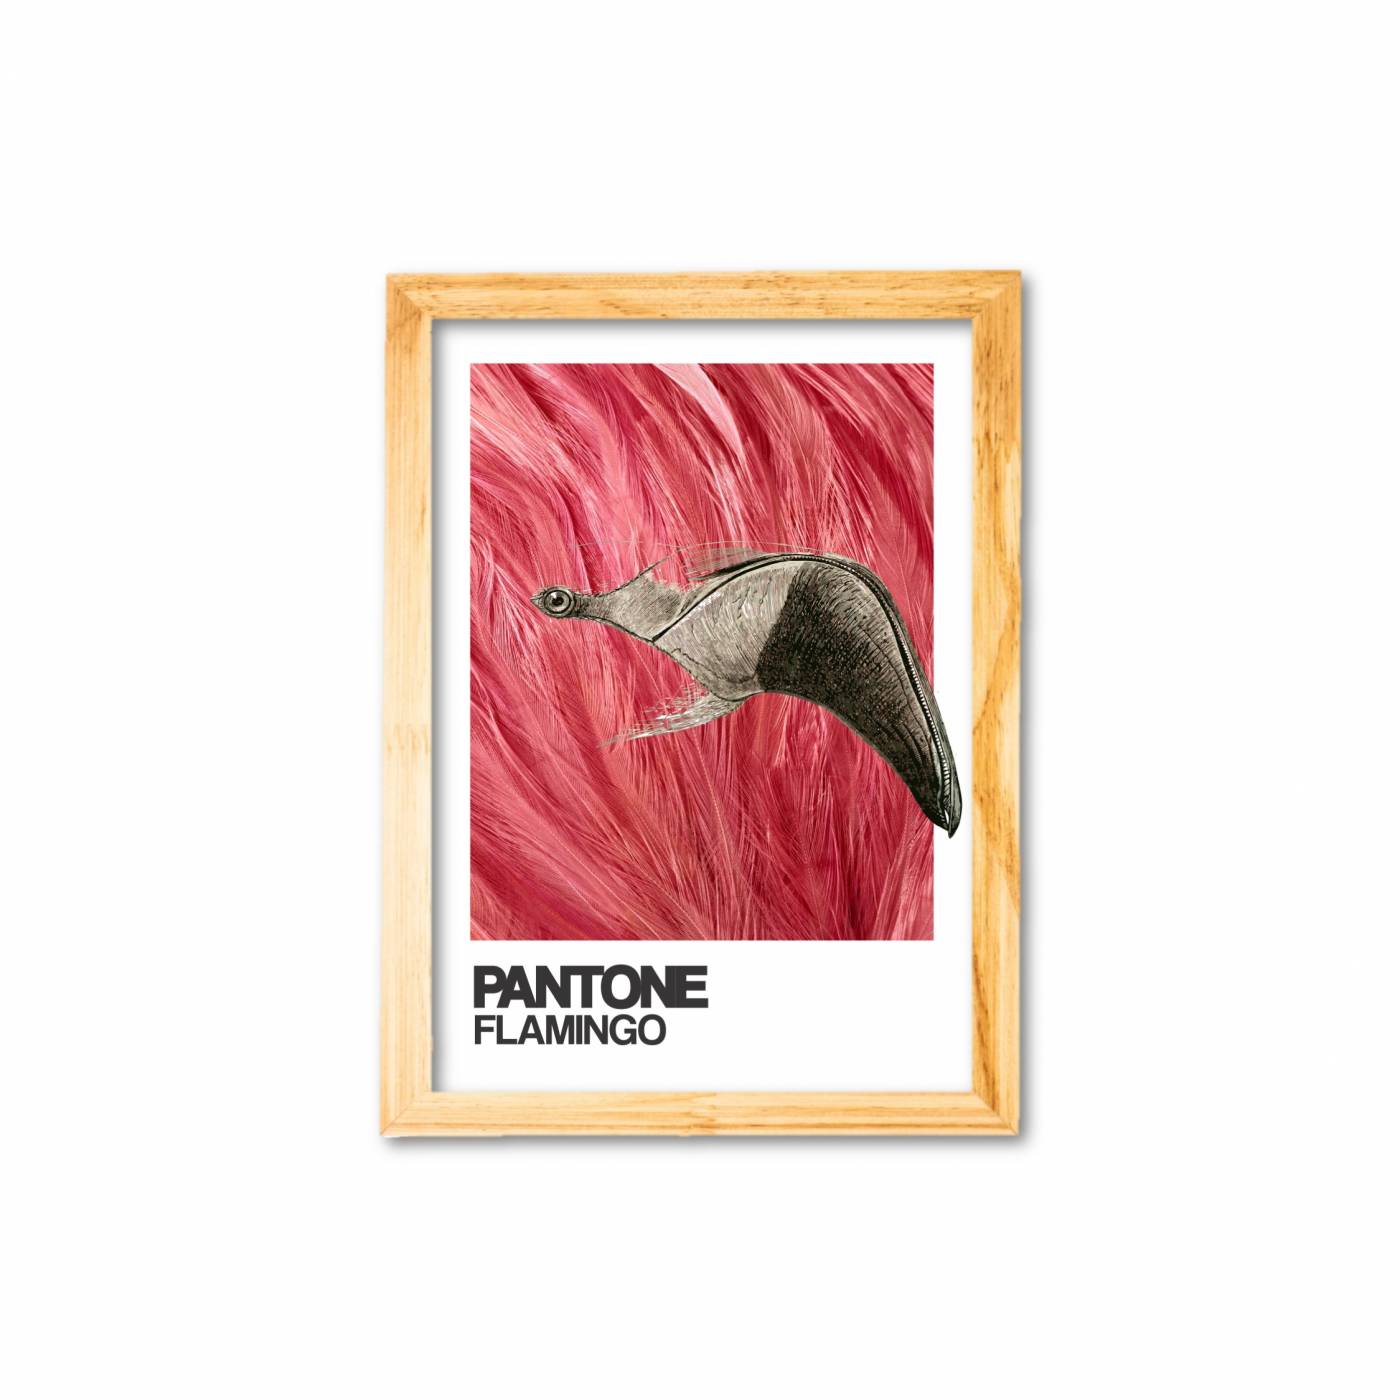 Pantone flamingo